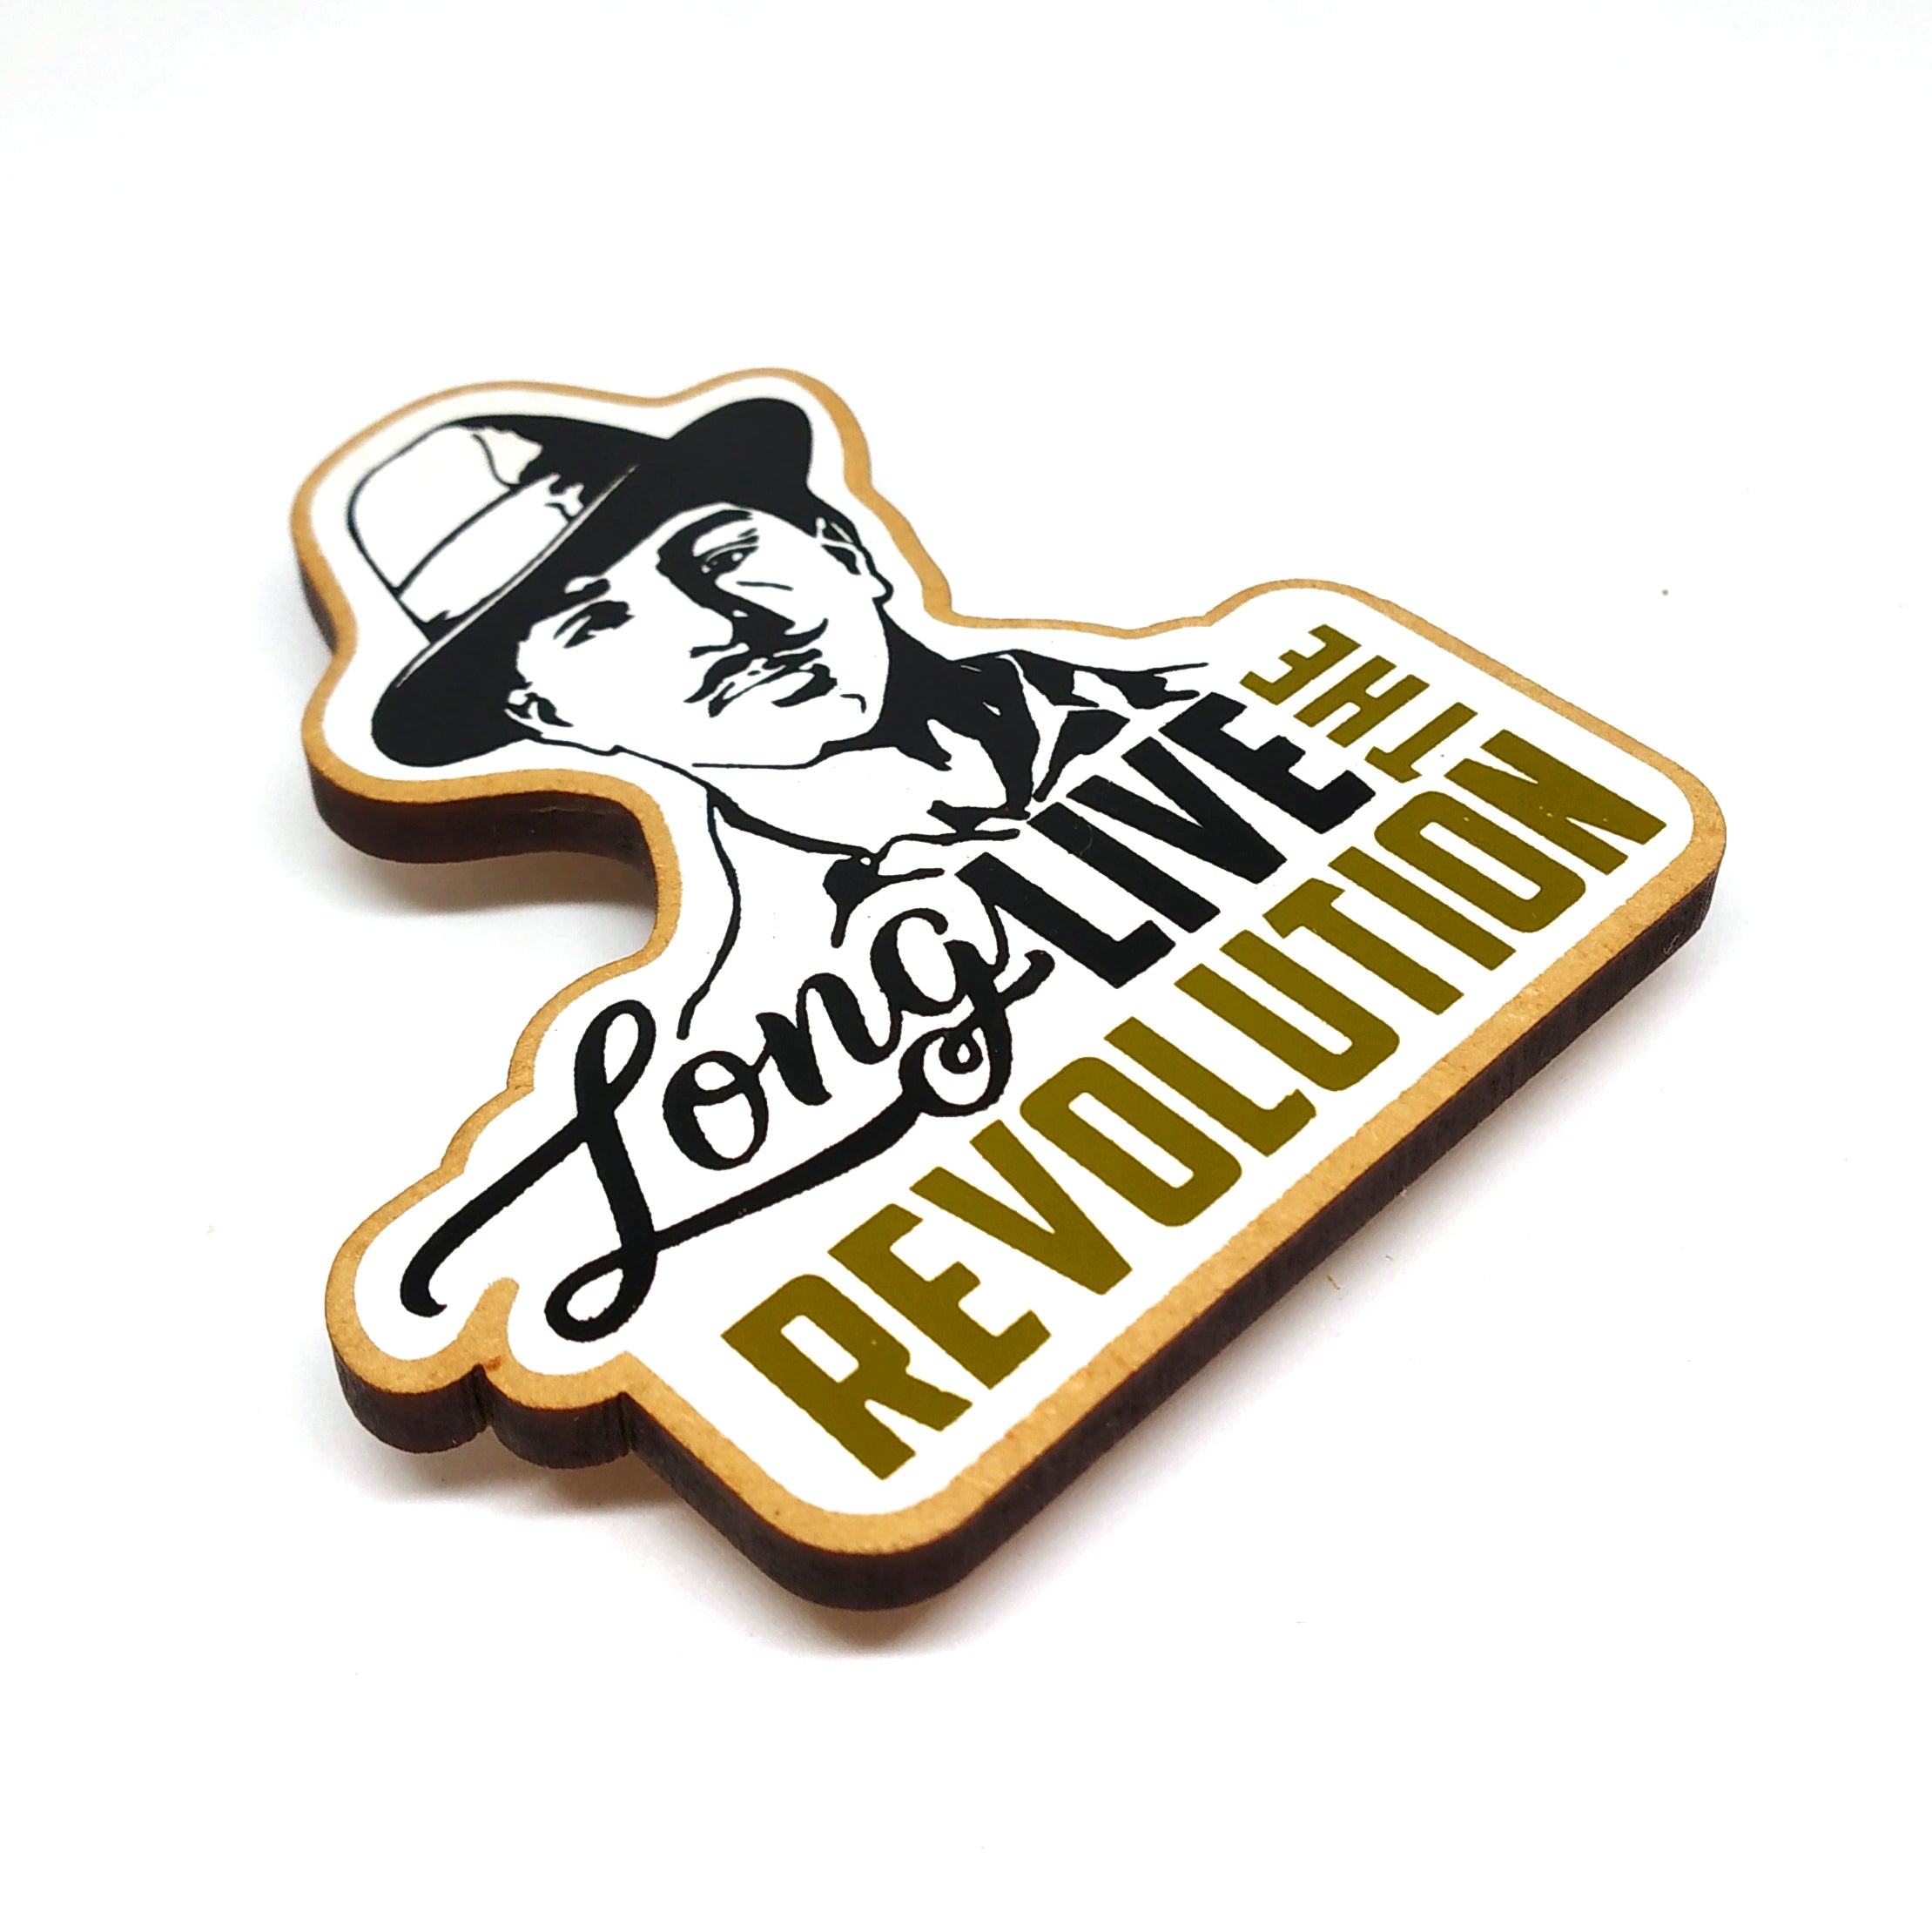 Long live the Revolution - Bhagat Singh - Fridge Magnet